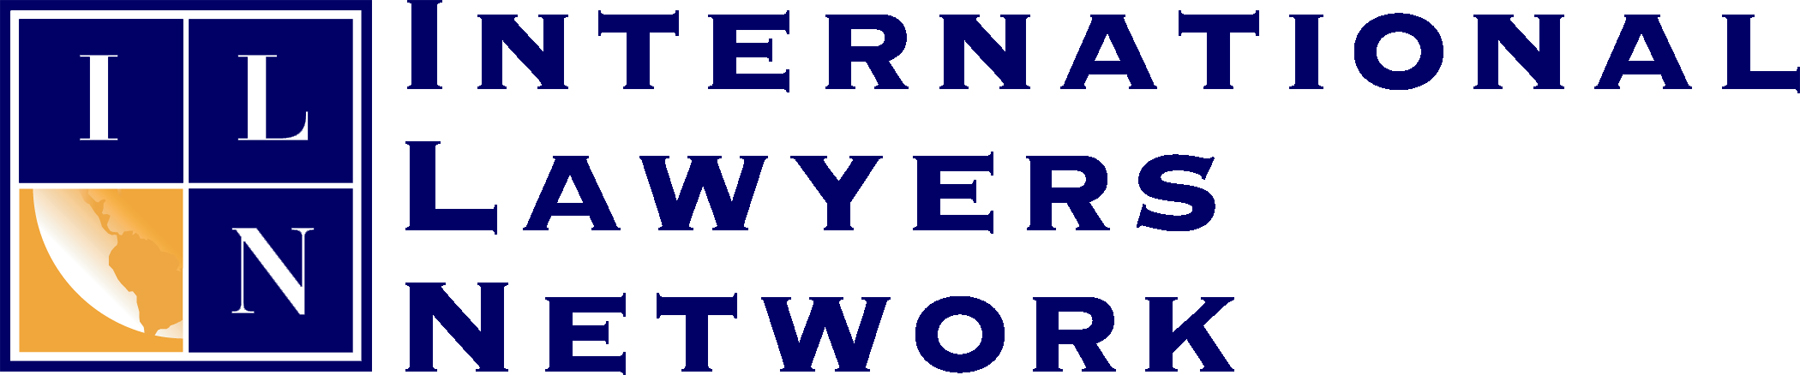 logo network